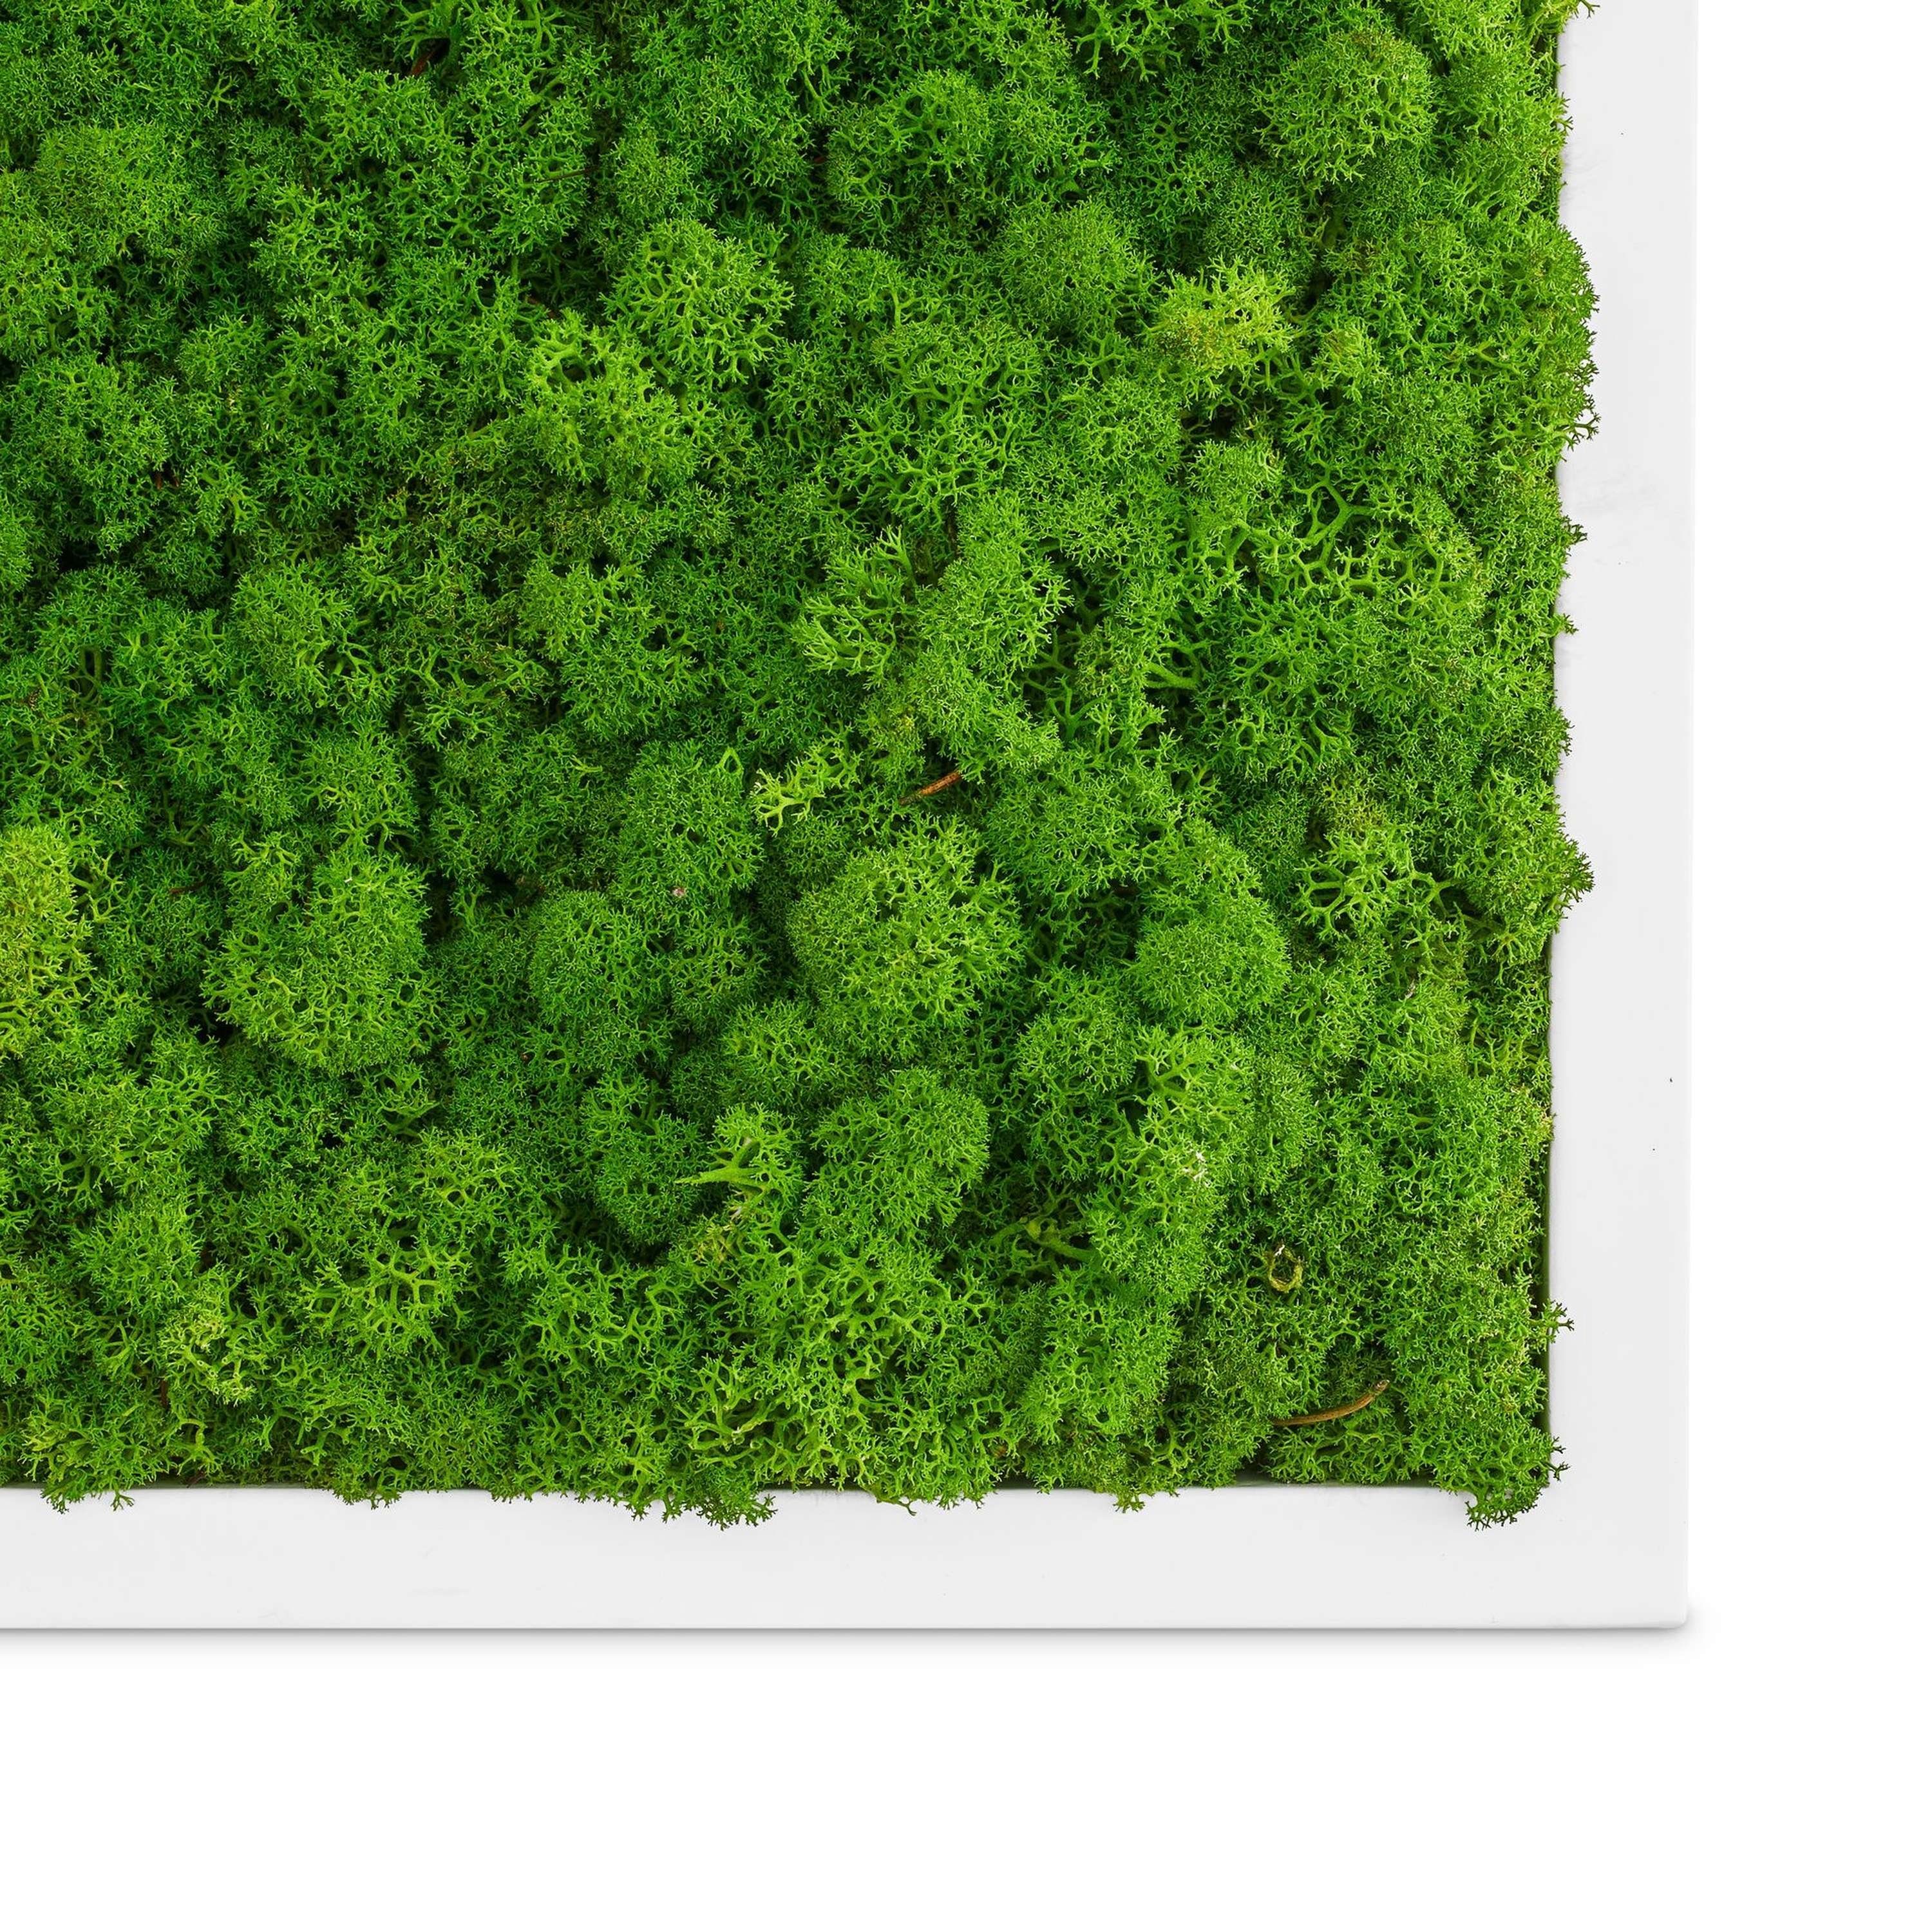 Moosbild St), naturewalls konserviert Islandmoos - - Weiß Wandbild, (1 Vollholz-Rahmen Bild Pflanzenbild